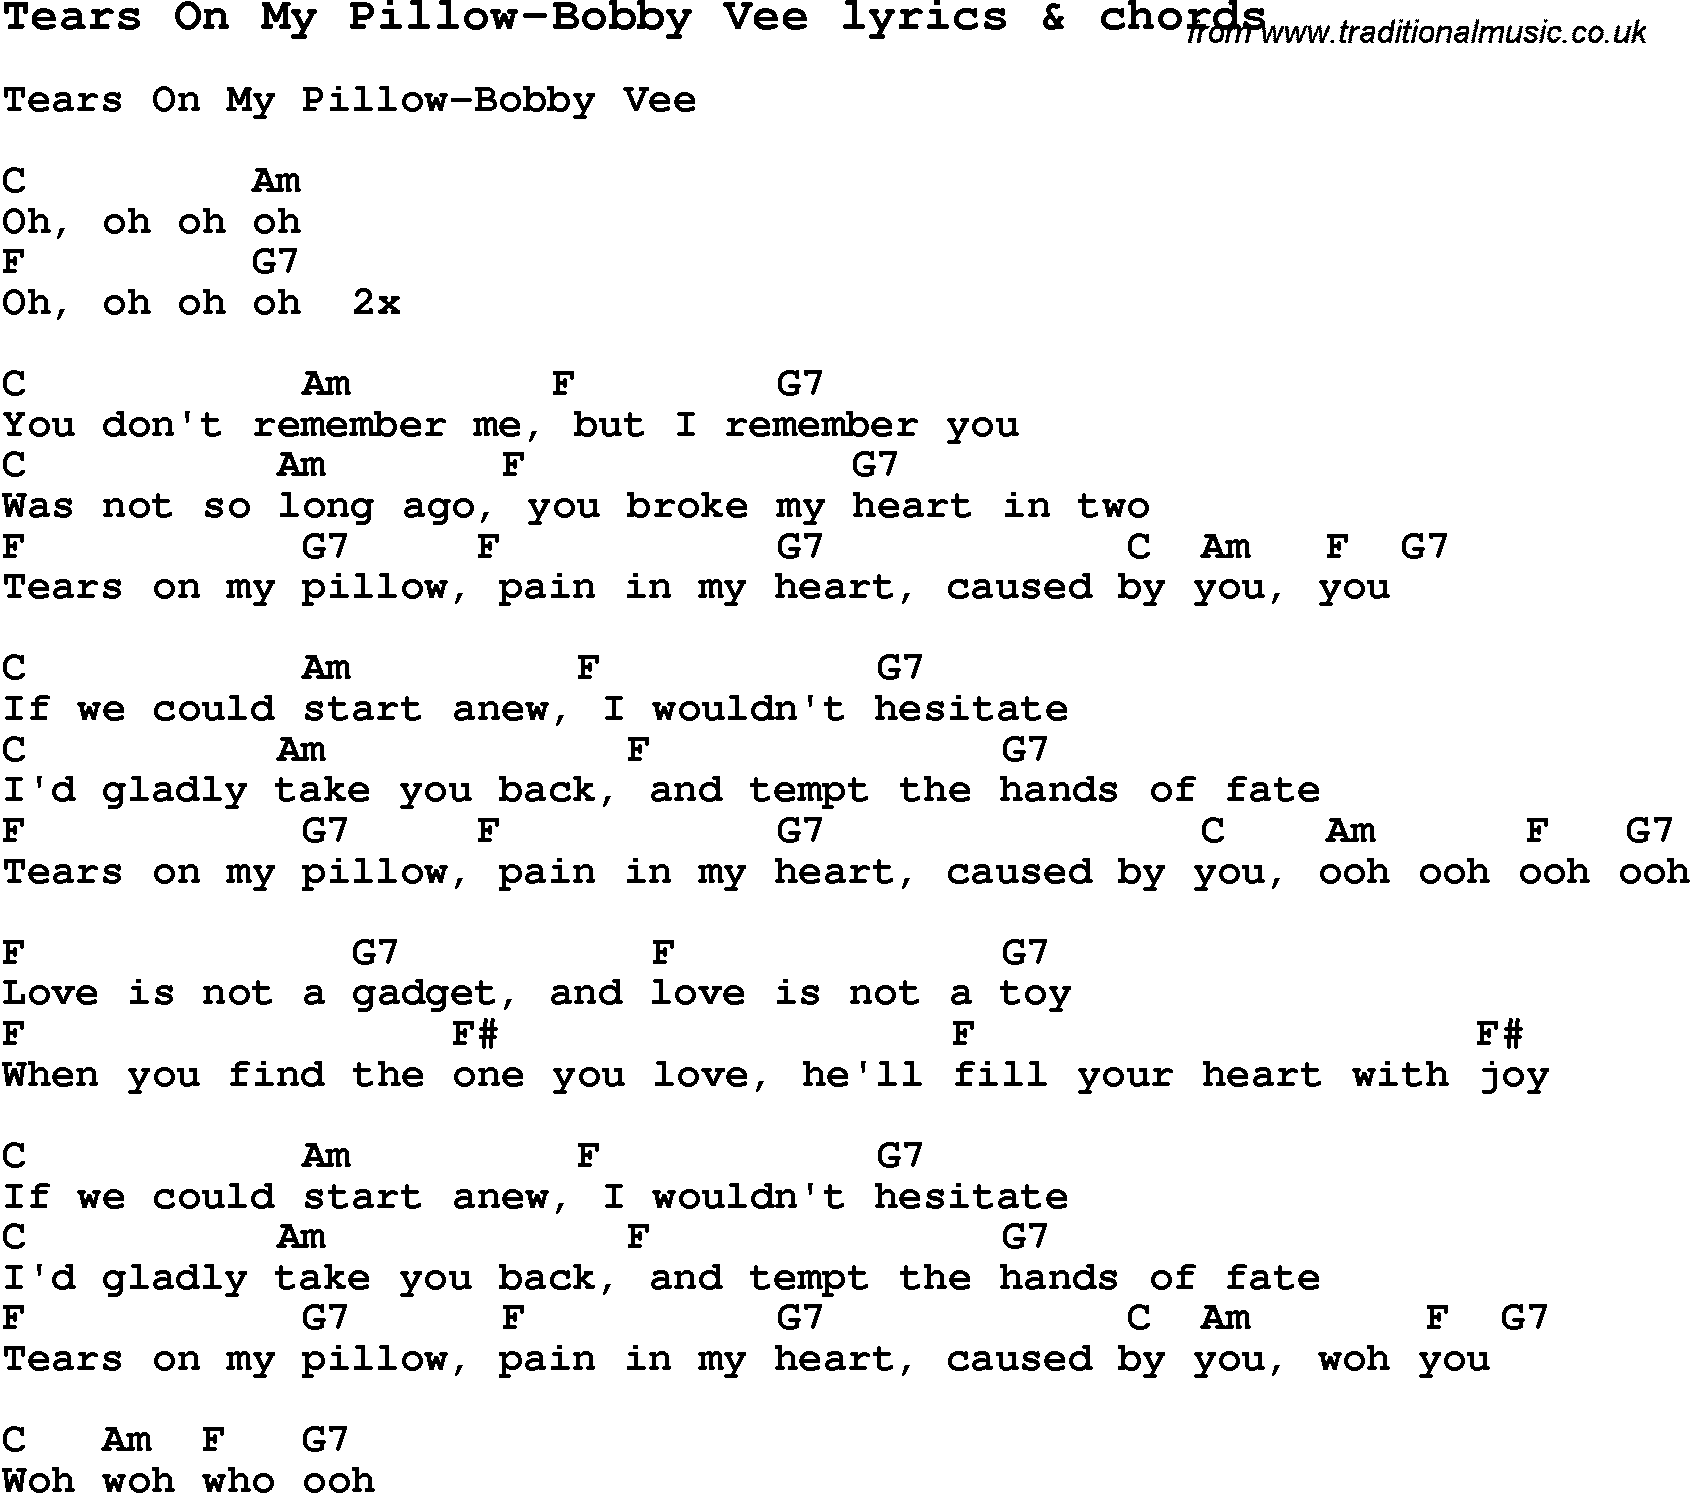 Love Song Lyrics for: Tears On My Pillow-Bobby Vee with chords for Ukulele, Guitar Banjo etc.